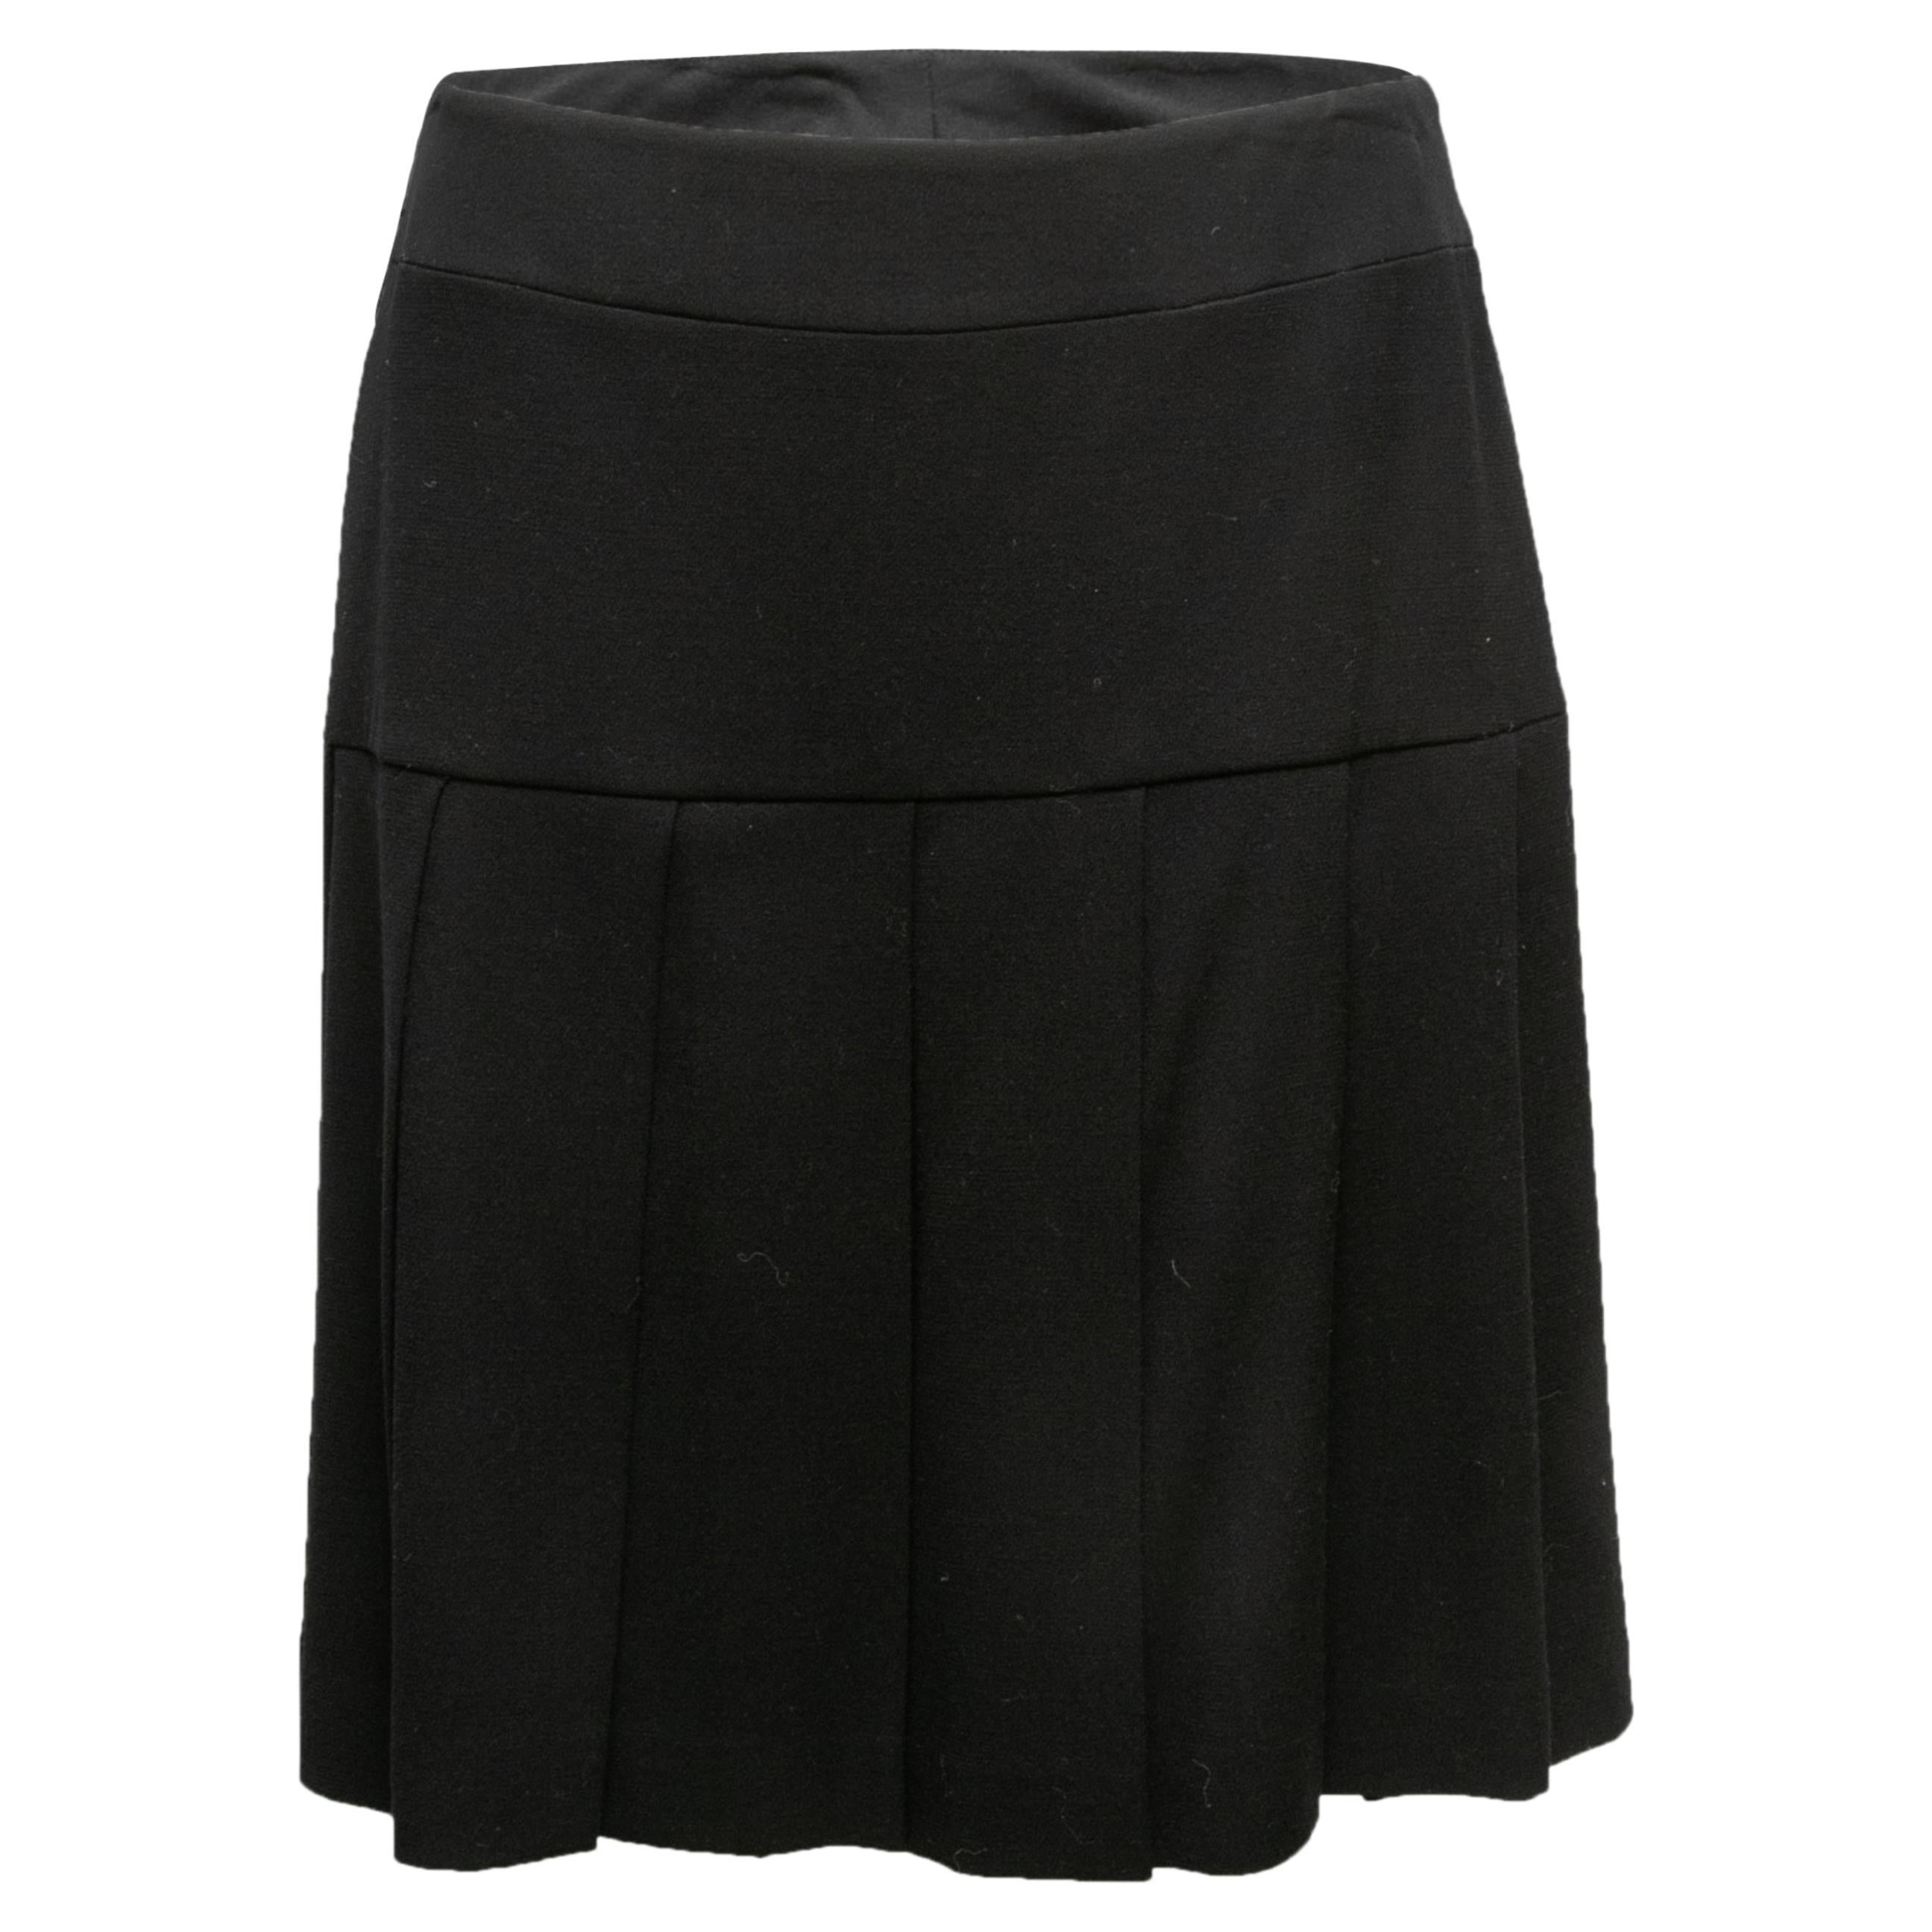 Vintage Black Chanel Boutique Pleated Skirt Size US L